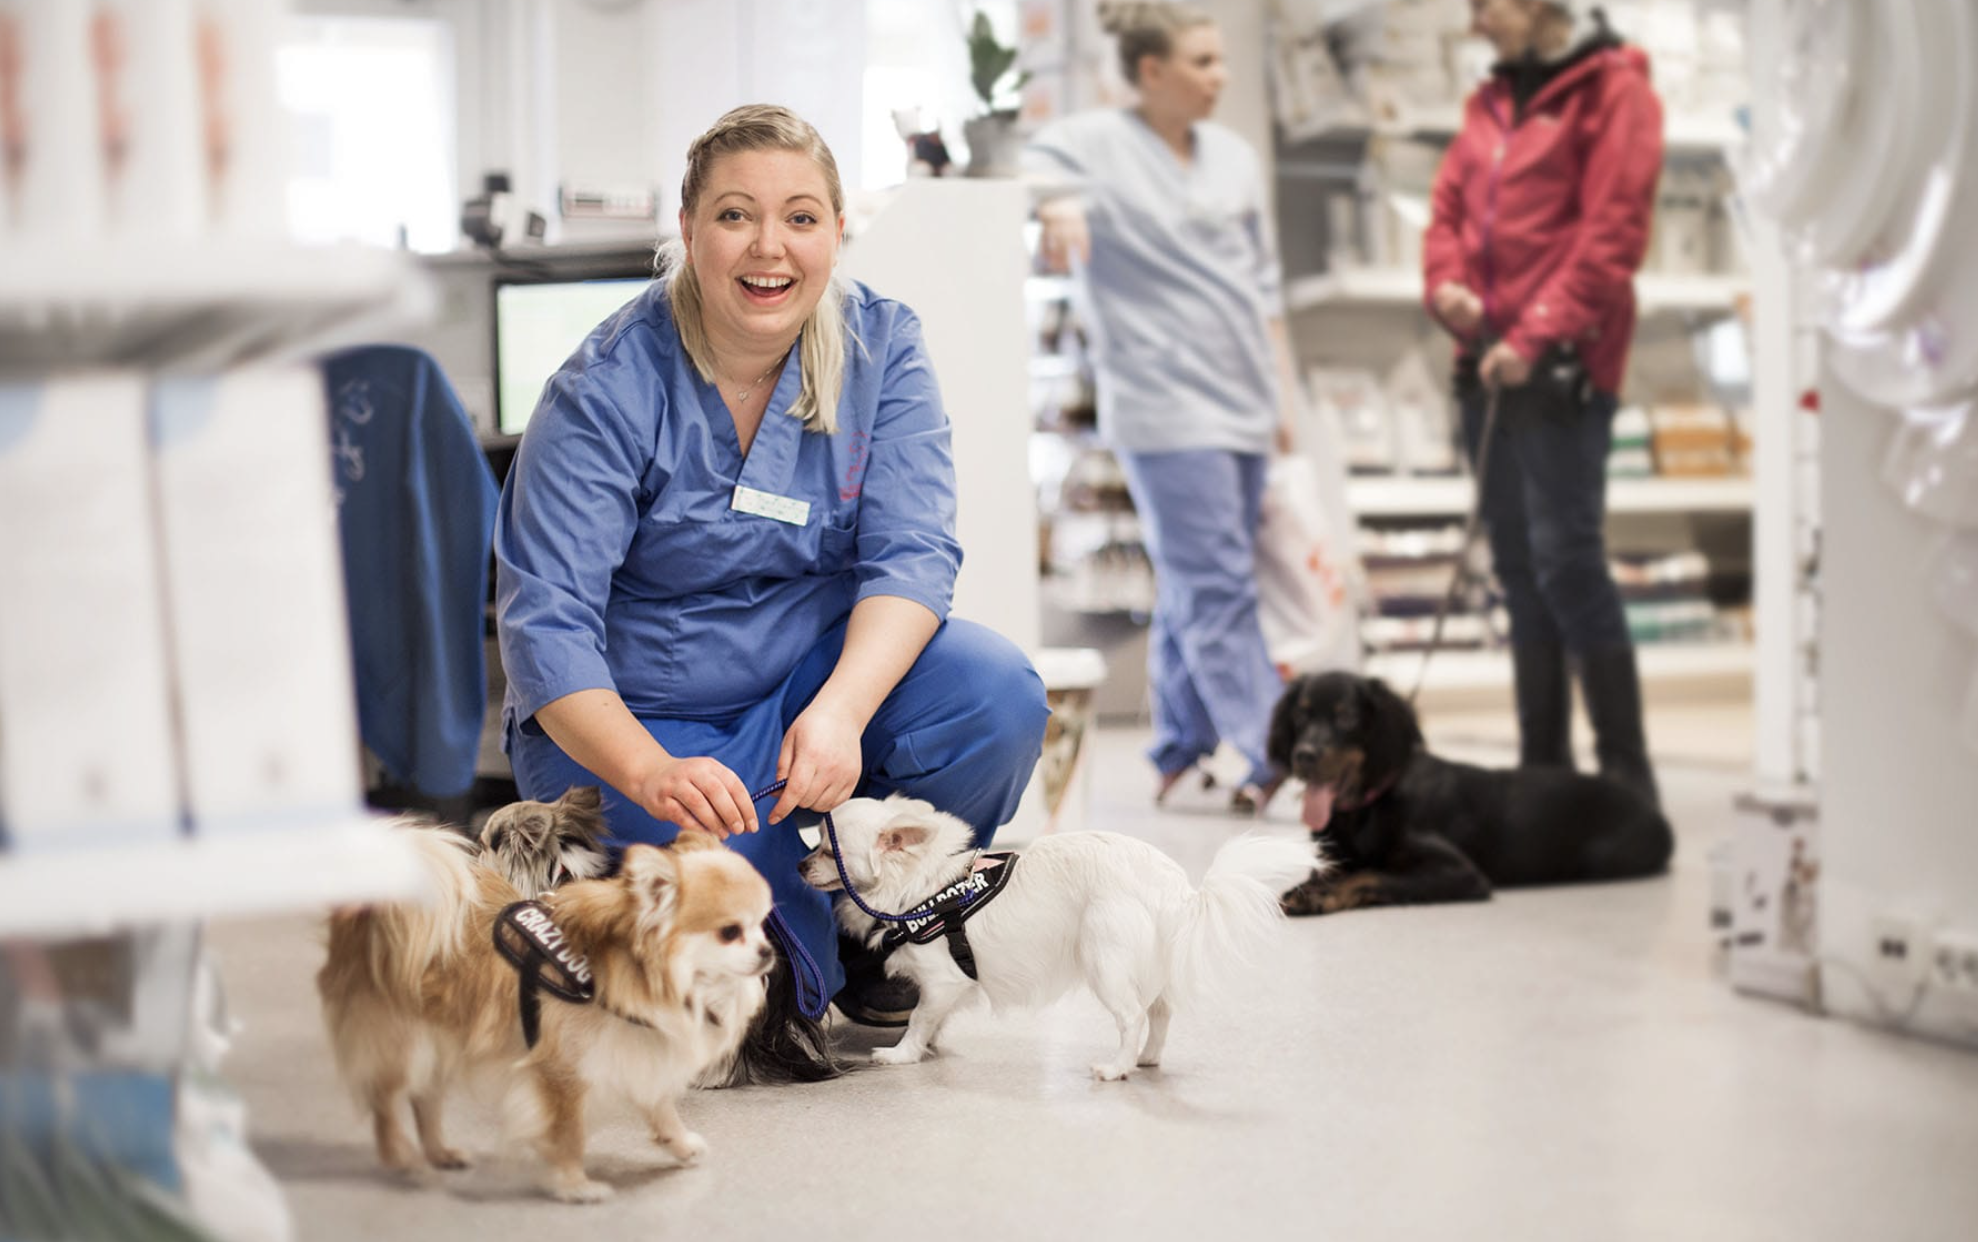 Veterinary staff enjoys her patients.